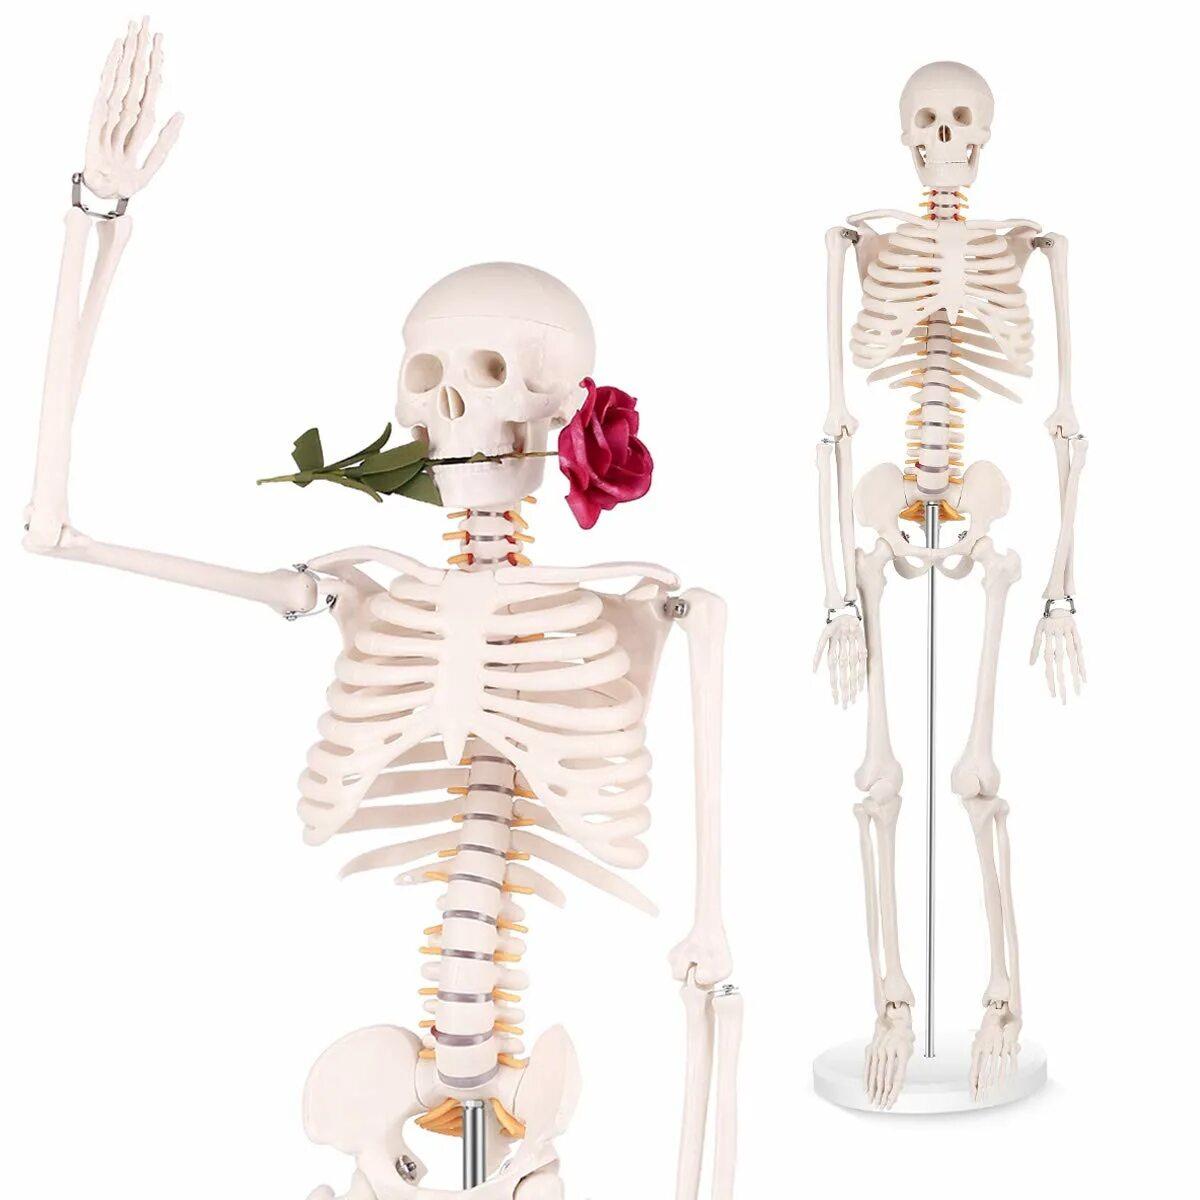 Скелет человека. Скелет человека со всех сторон. Идеальный скелет человека. Мини скелет человека.